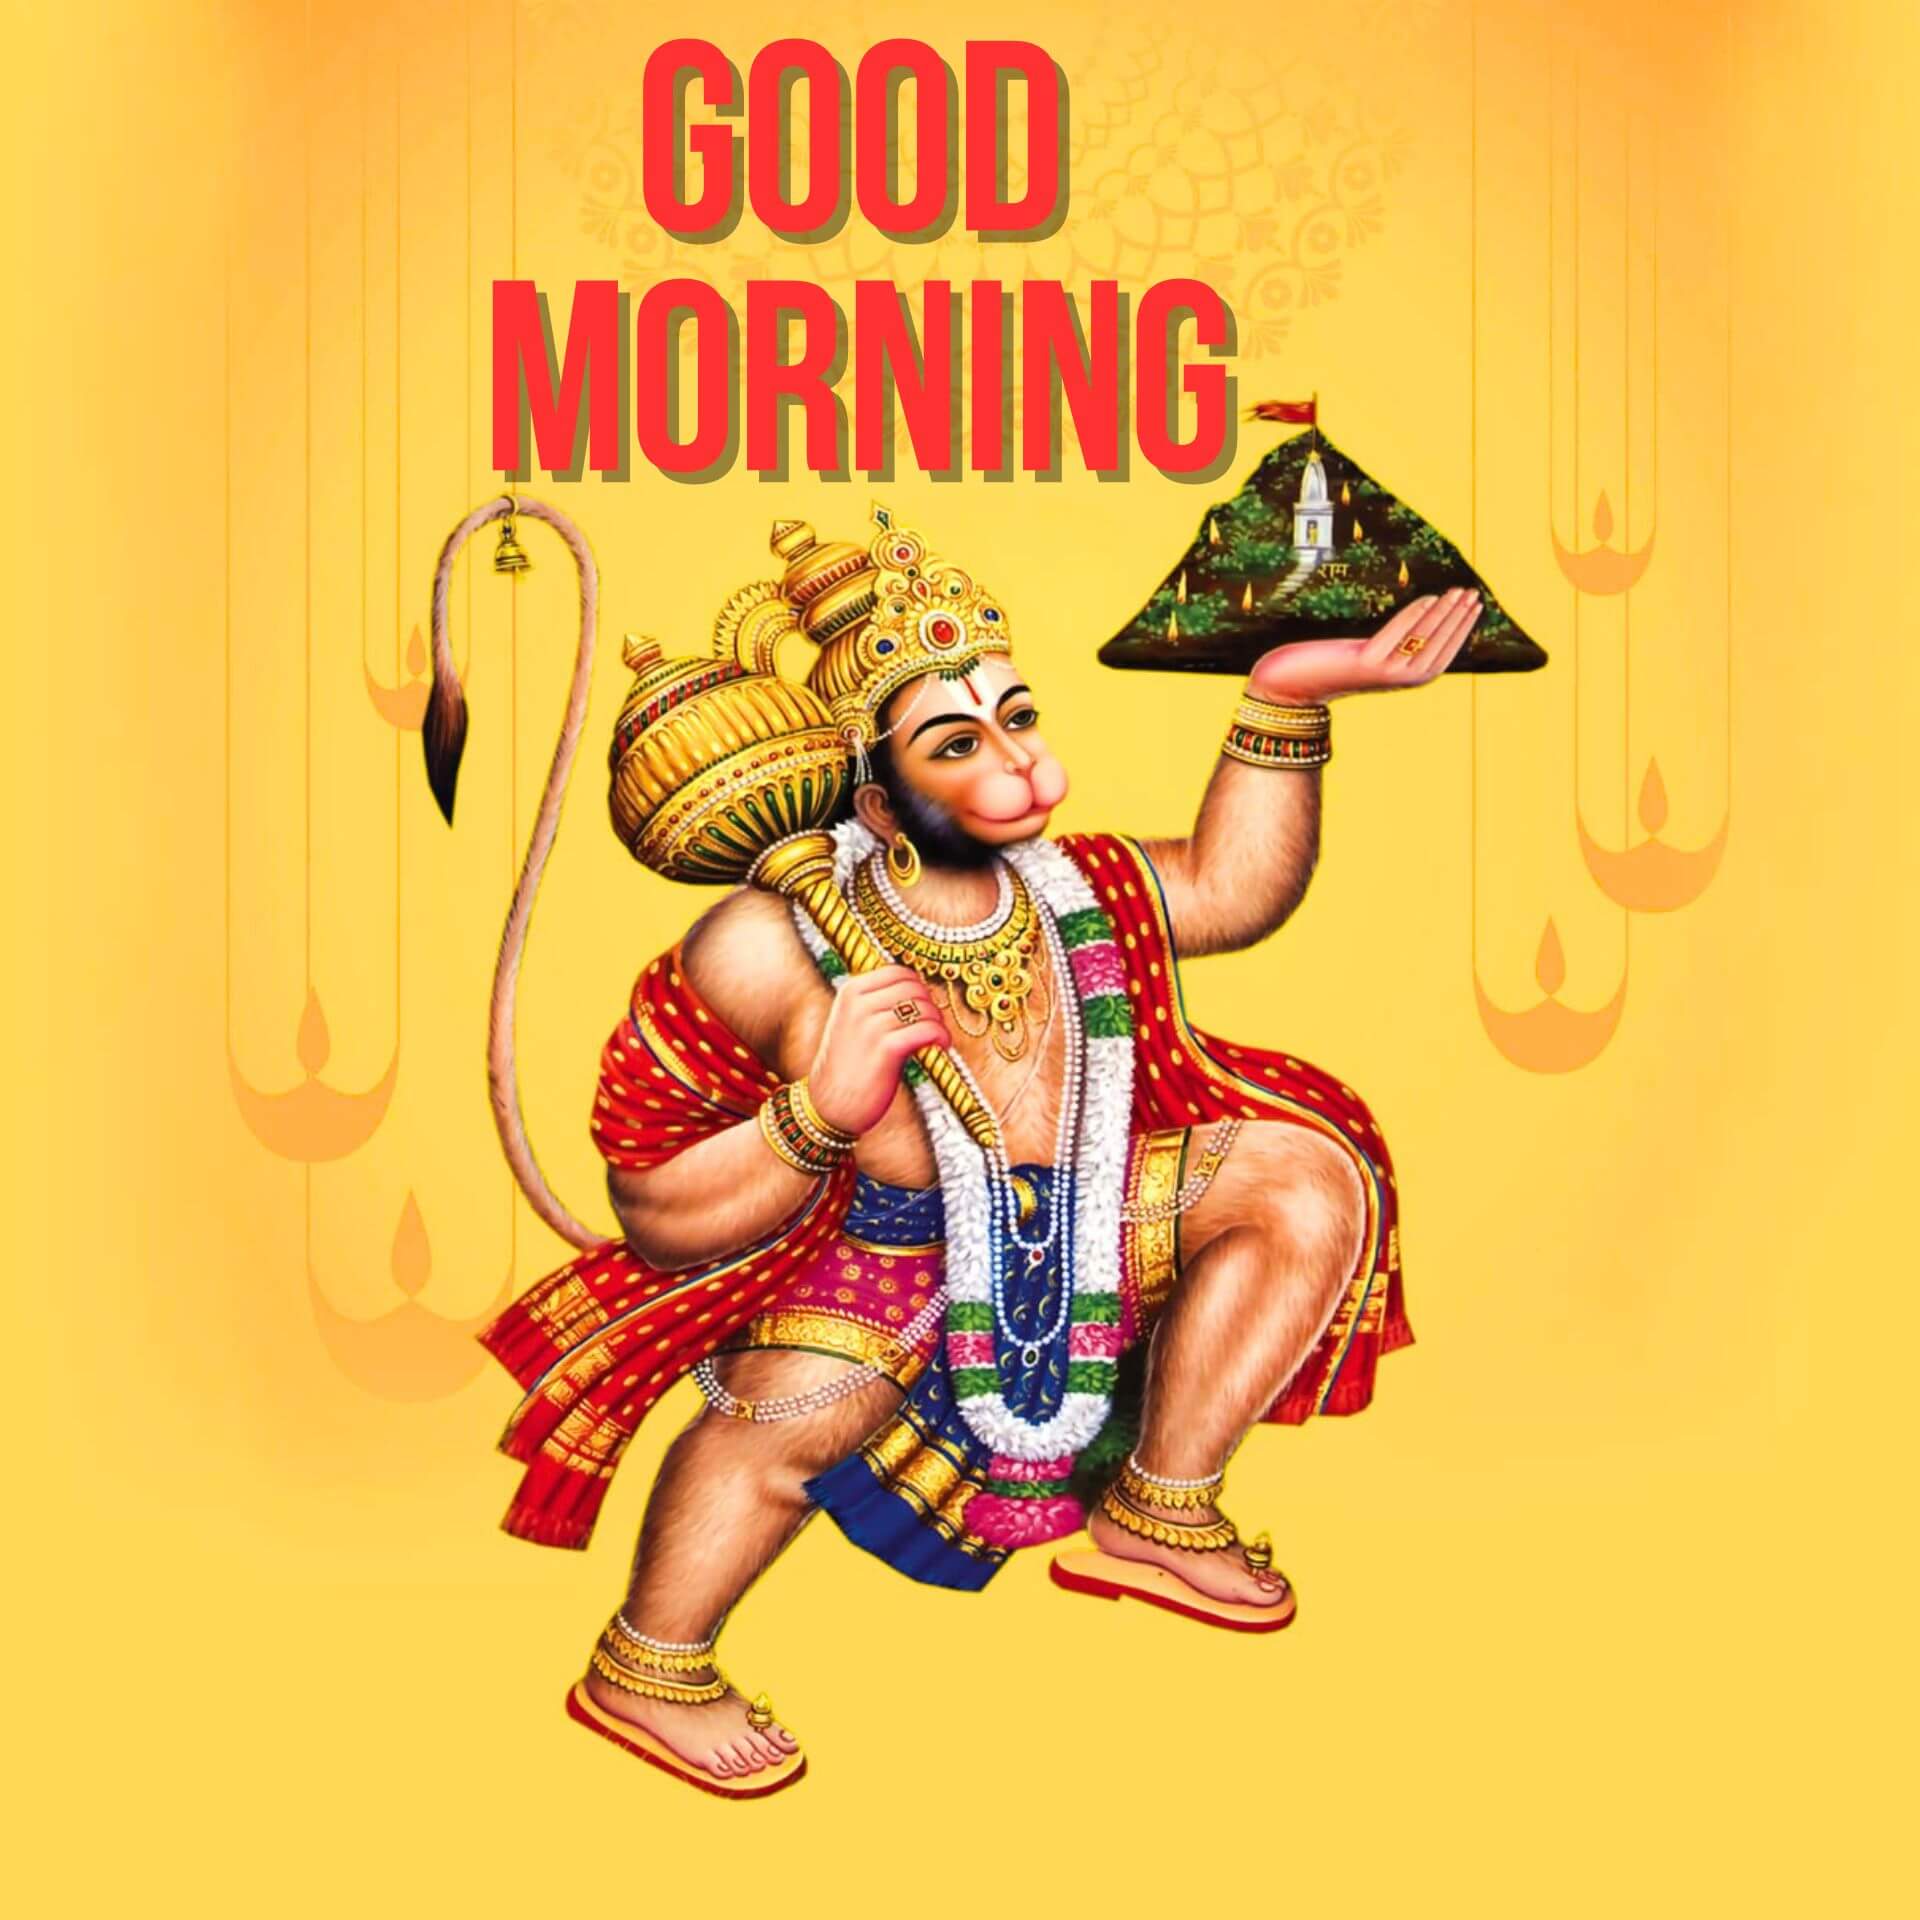 free Lord hanuman ji good morning Images Wallpaper for Whatsapp